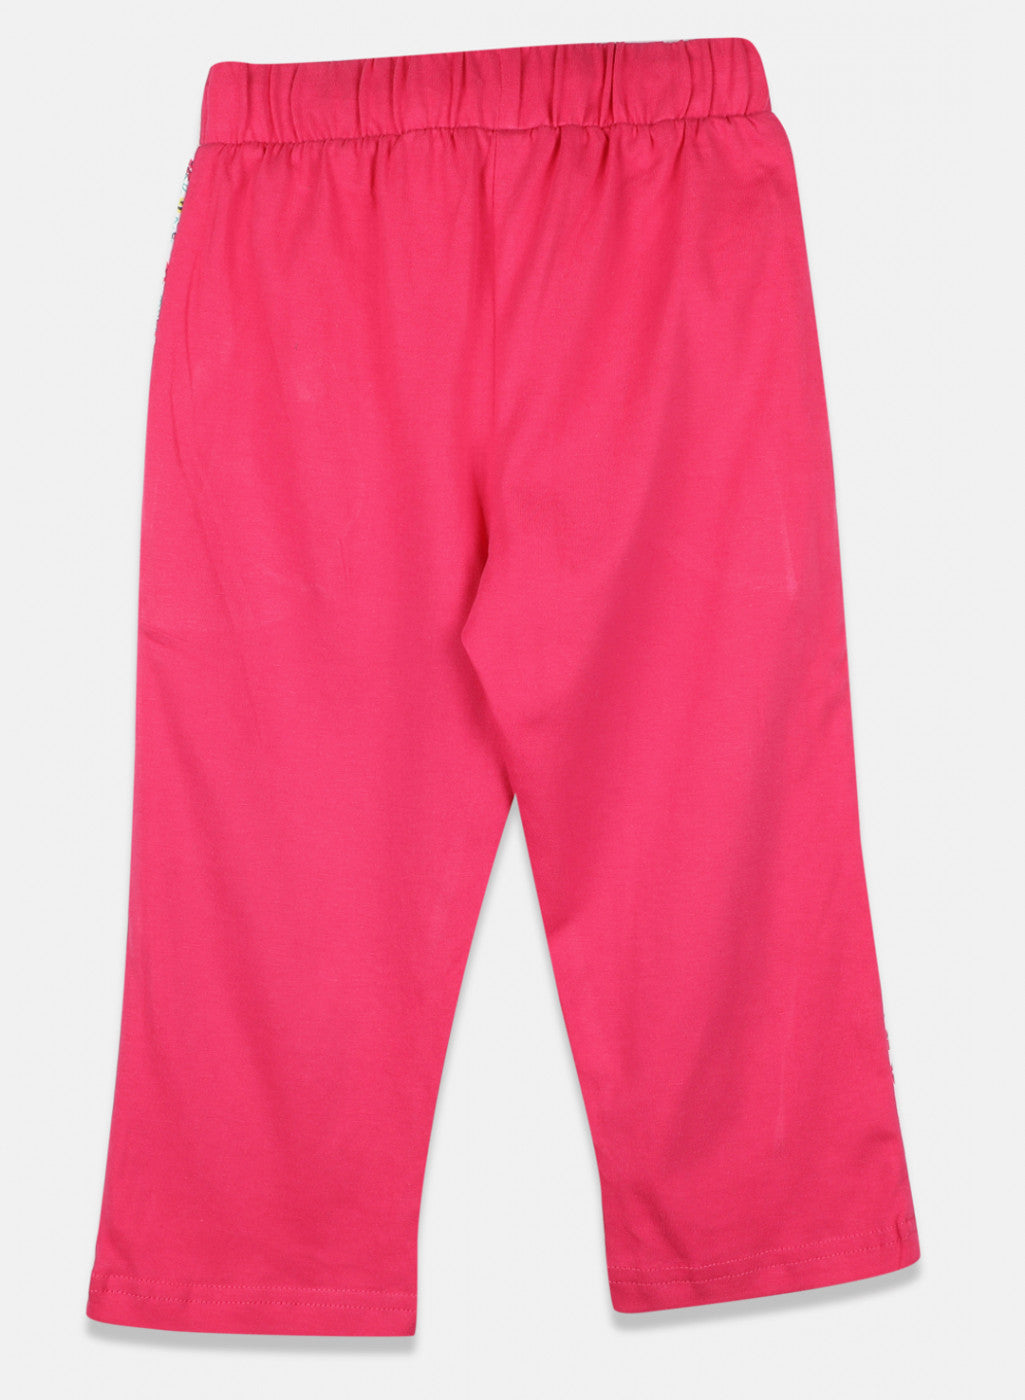 Girls Pink Printed Capri Set